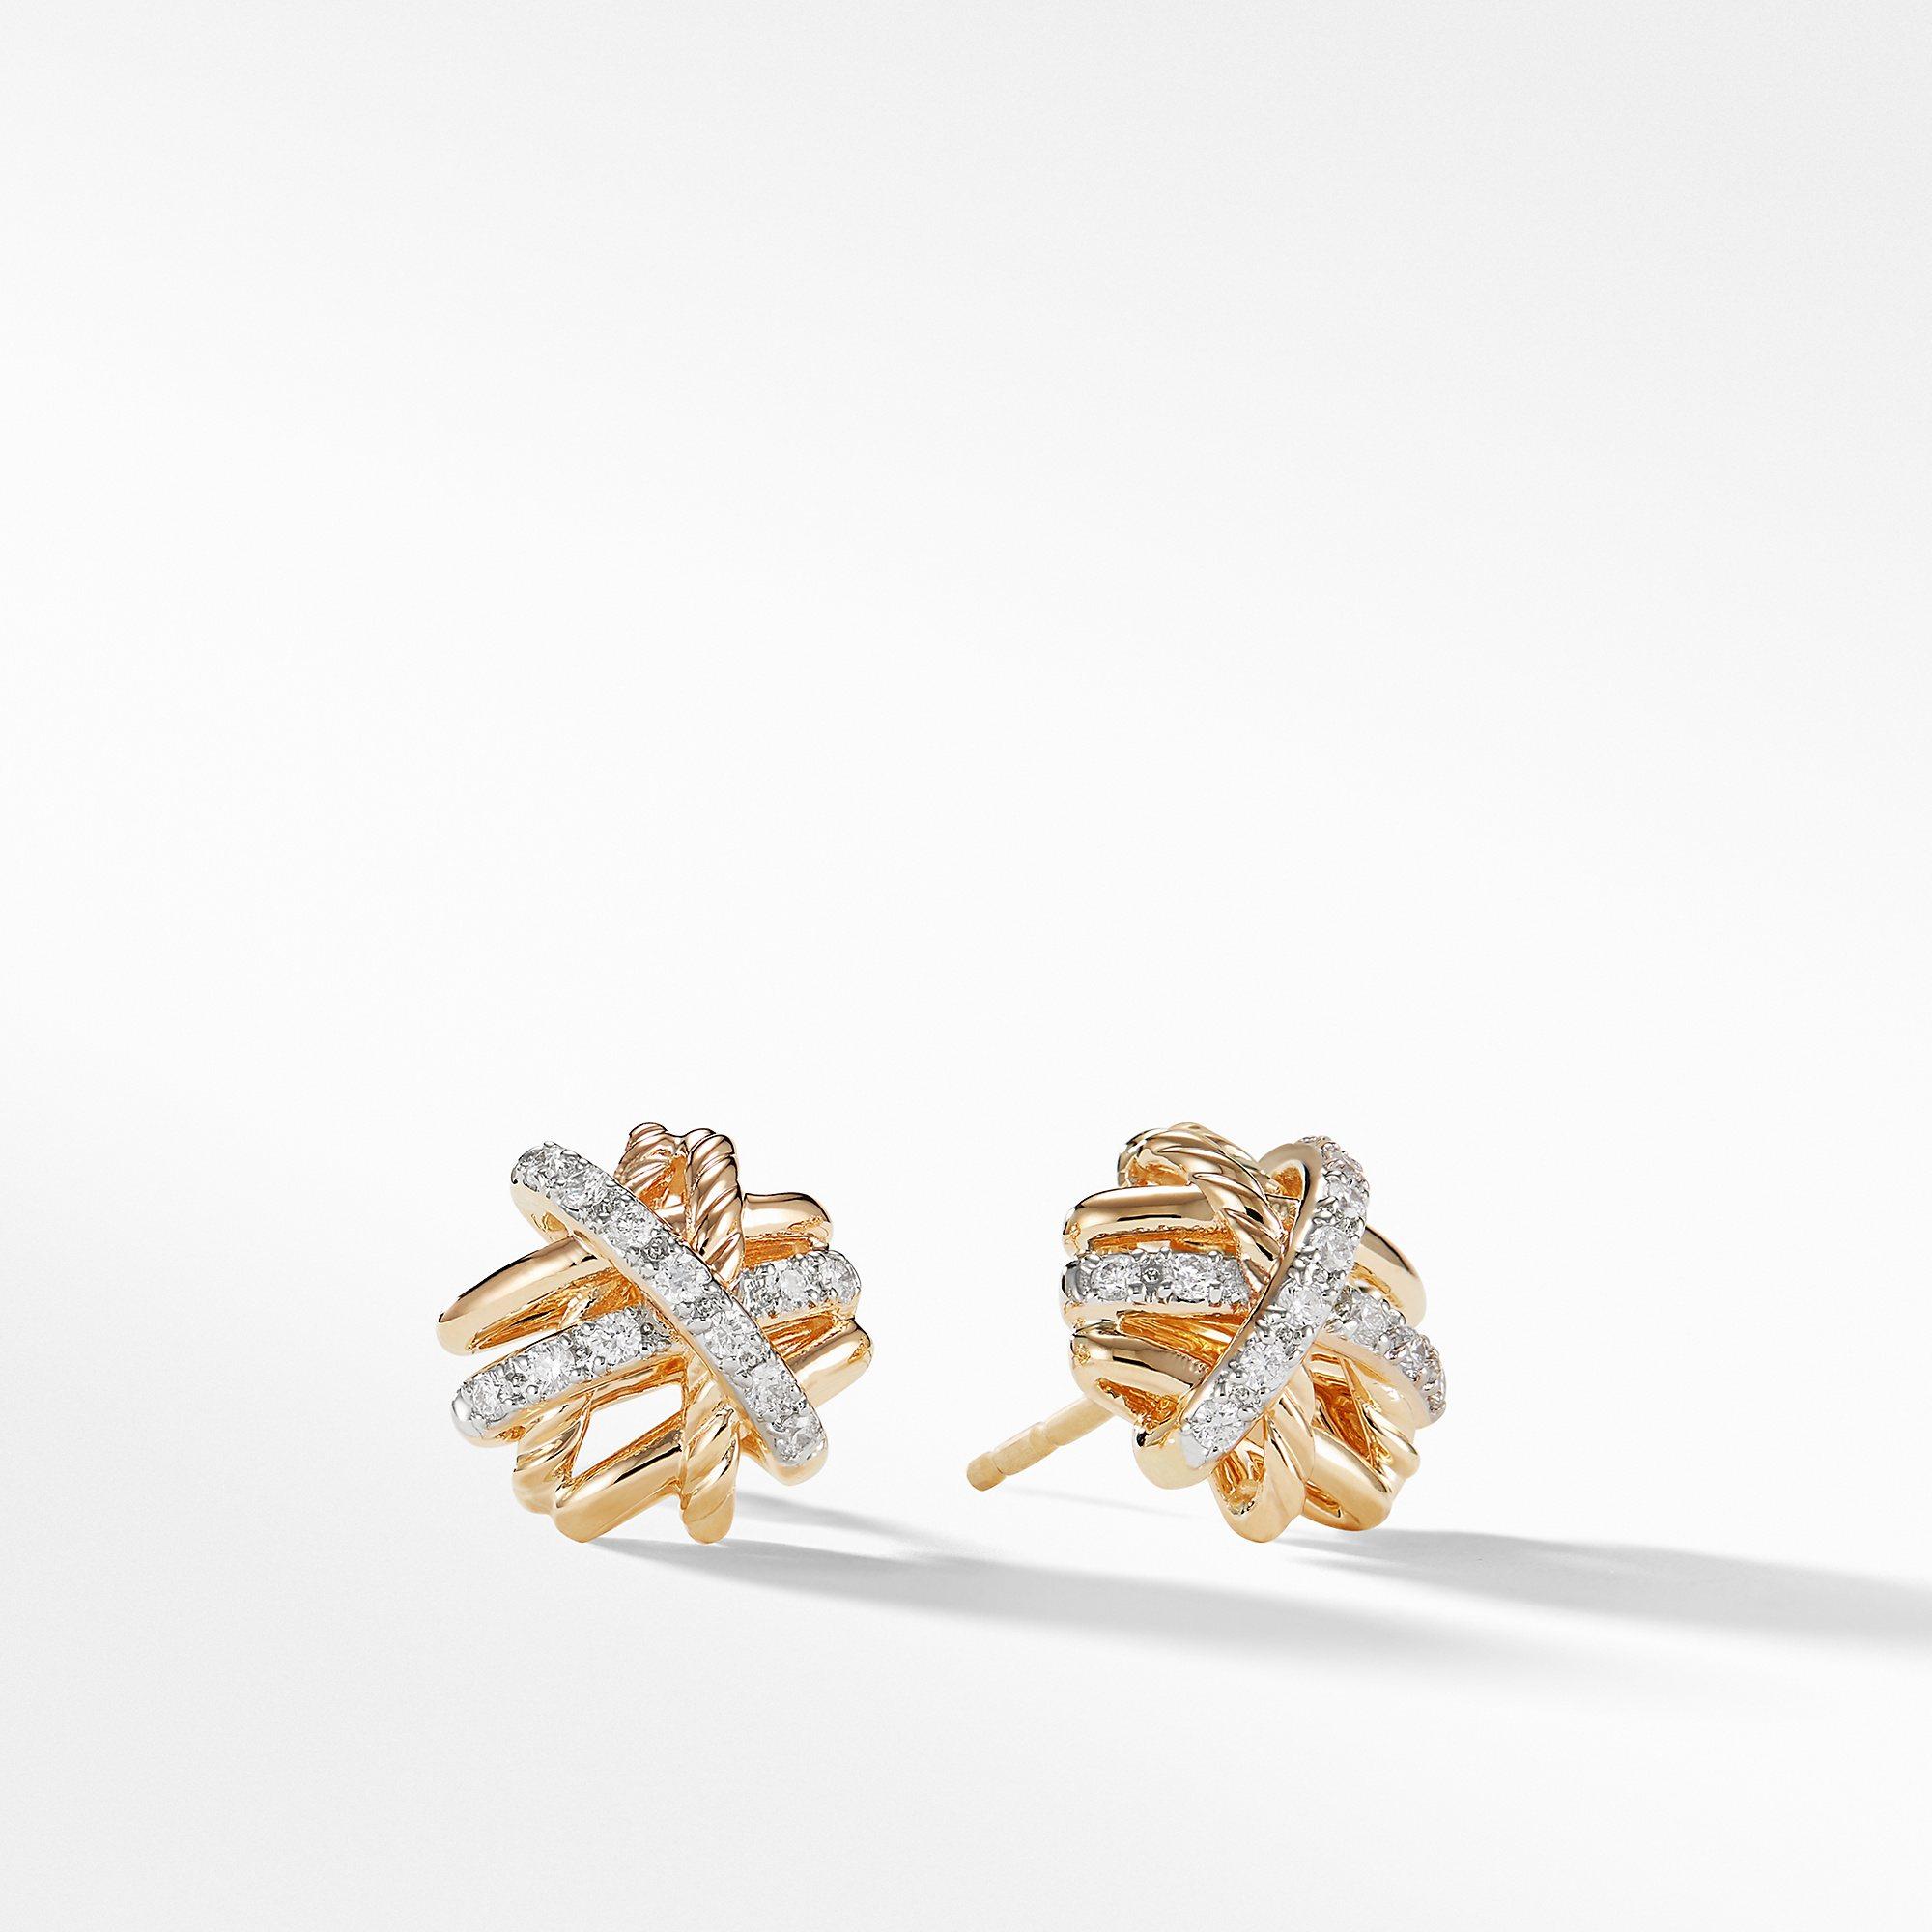 David Yurman Crossover Earrings with Diamonds in 18k Gold